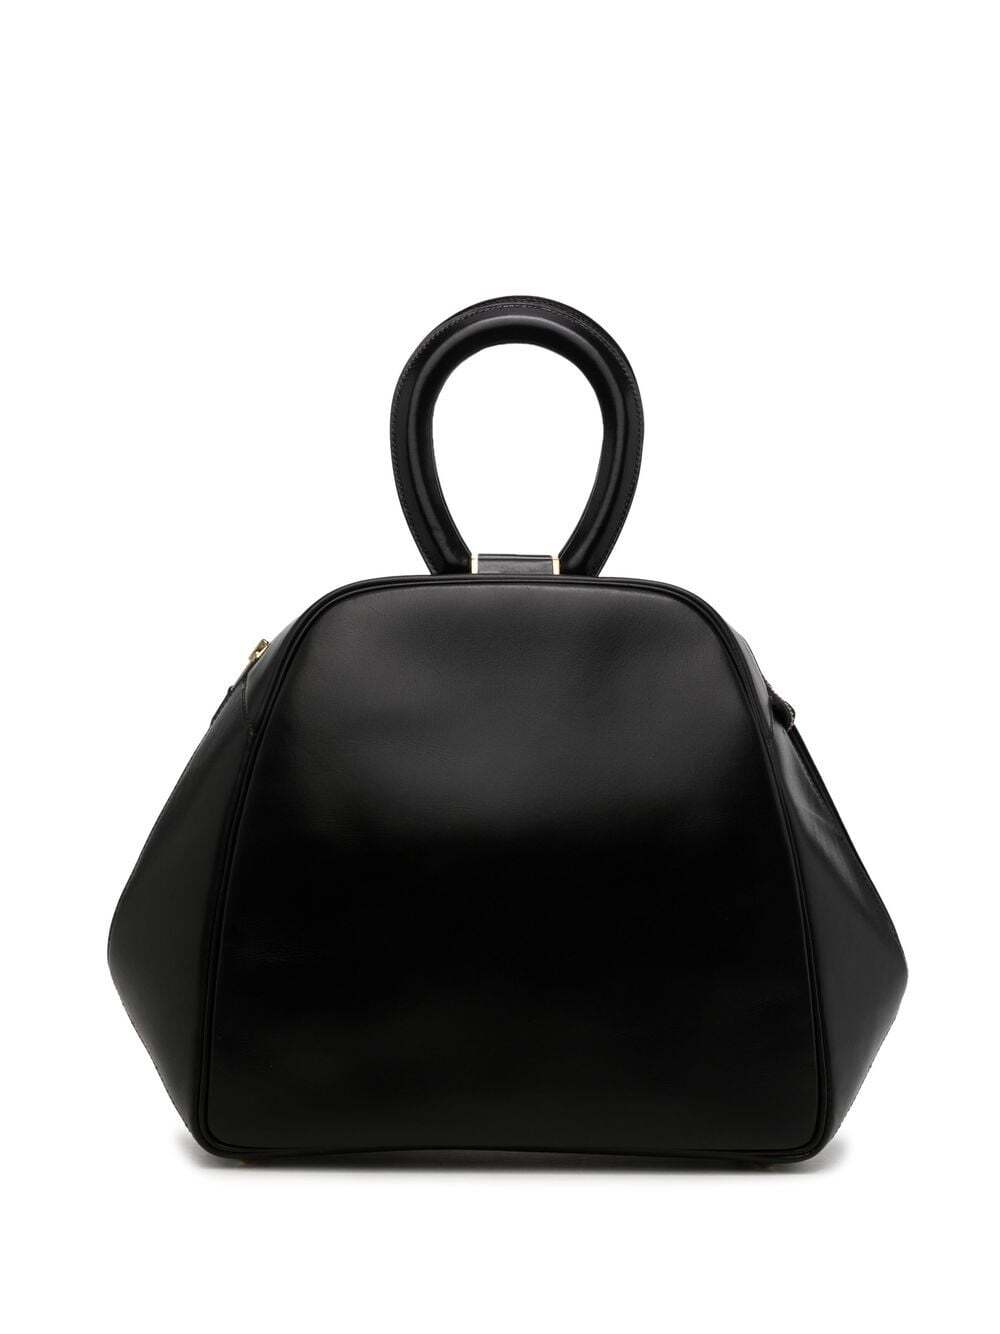 Hermès 1997 pre-owned rounded handbag - Black